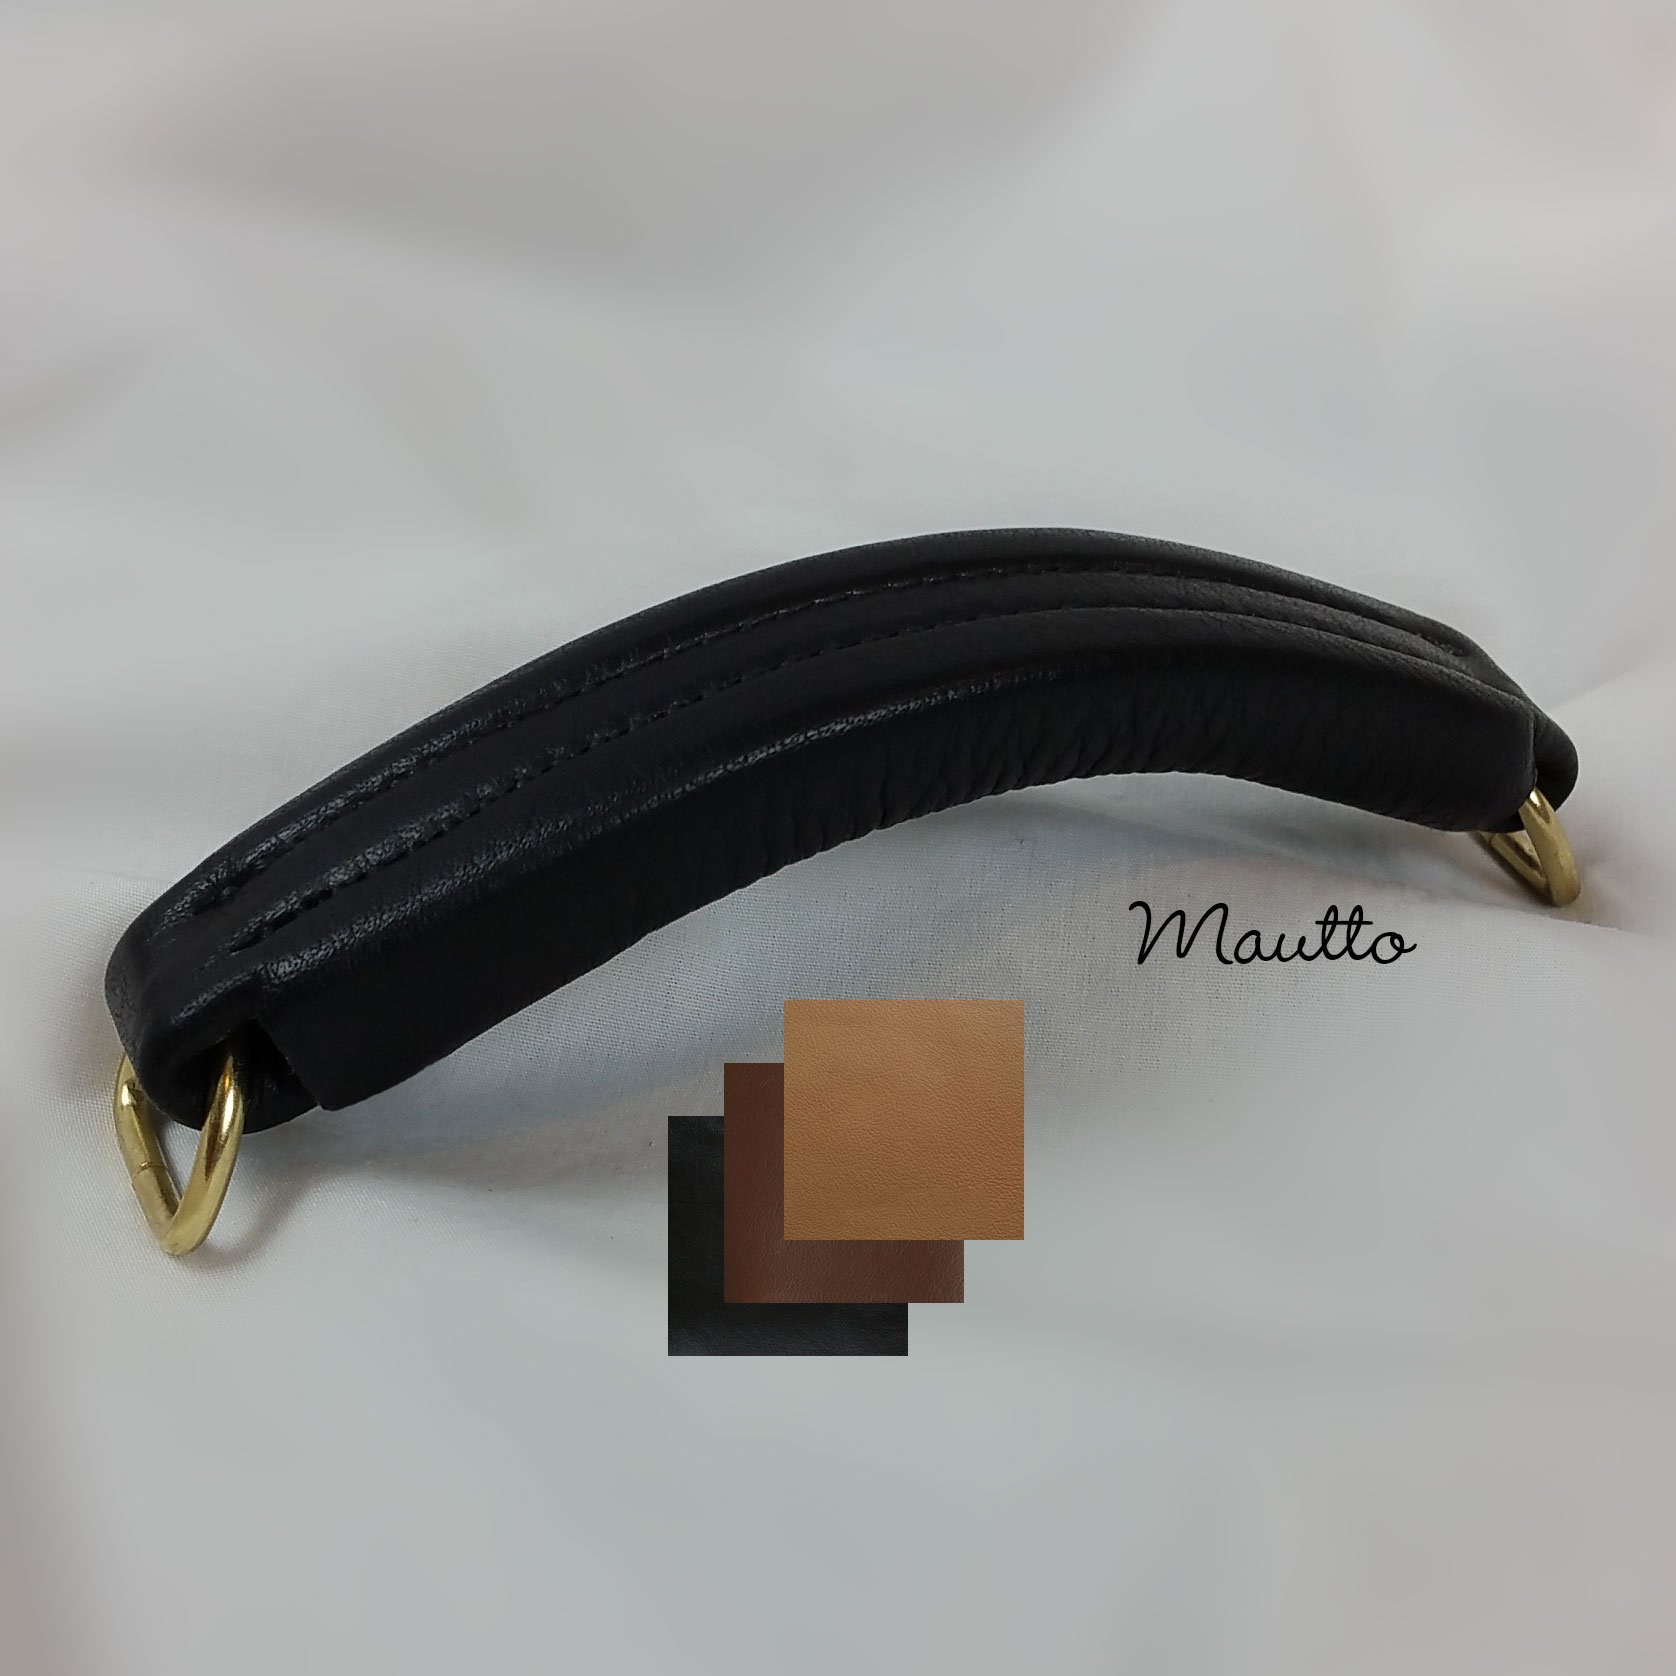 Leather Handle for Luggage, Briefcase, Satchel, Laptop Bag, Messenger